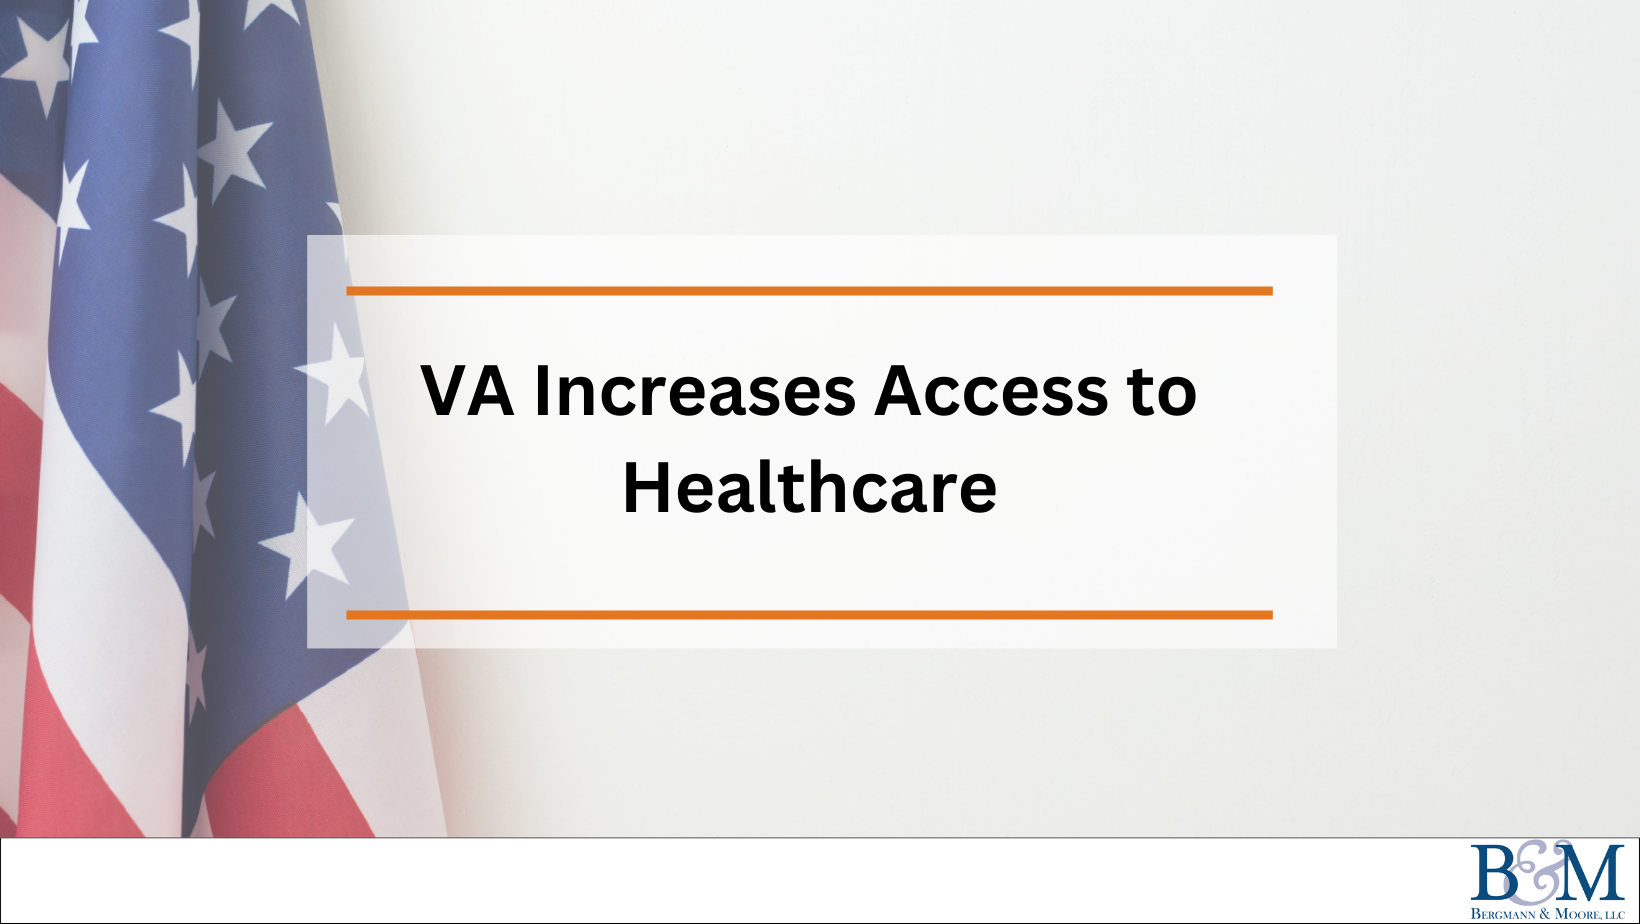 VA to increase Access to Healthcare